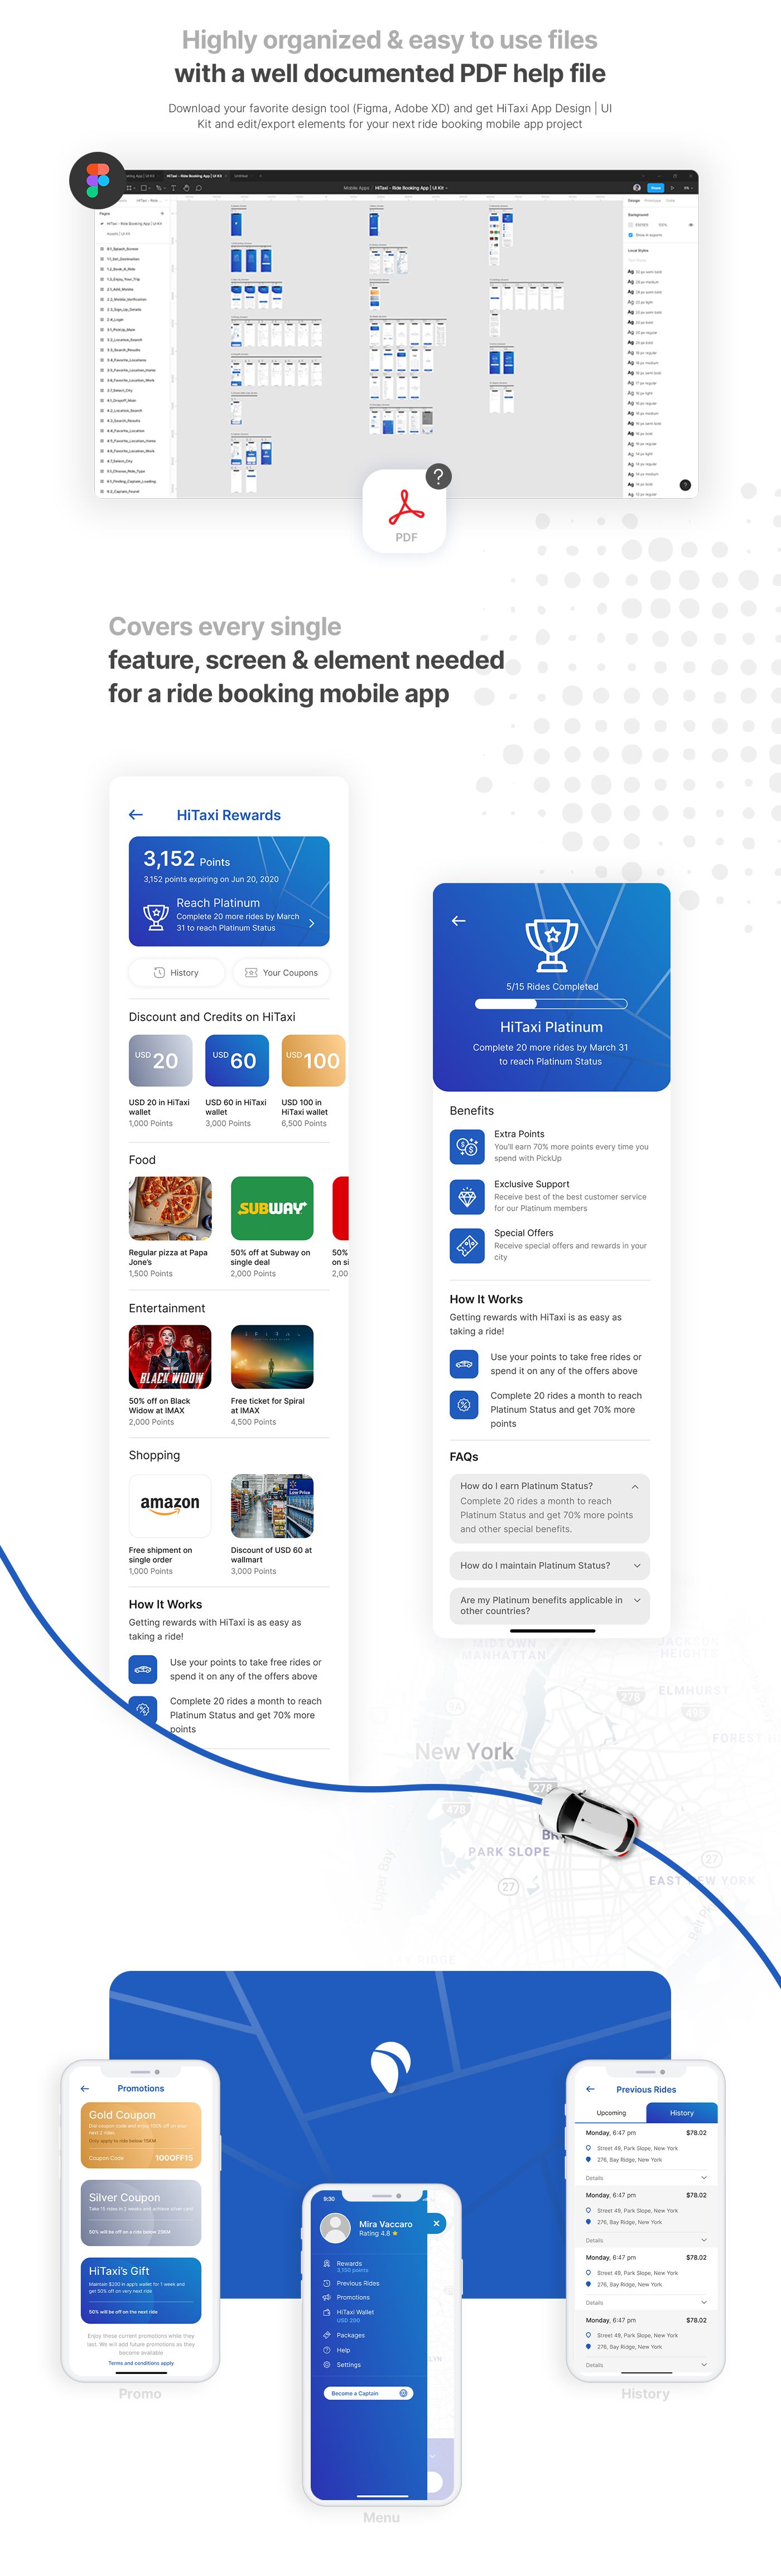 HiTaxi - Figma UI Kit for Mobile App - 3